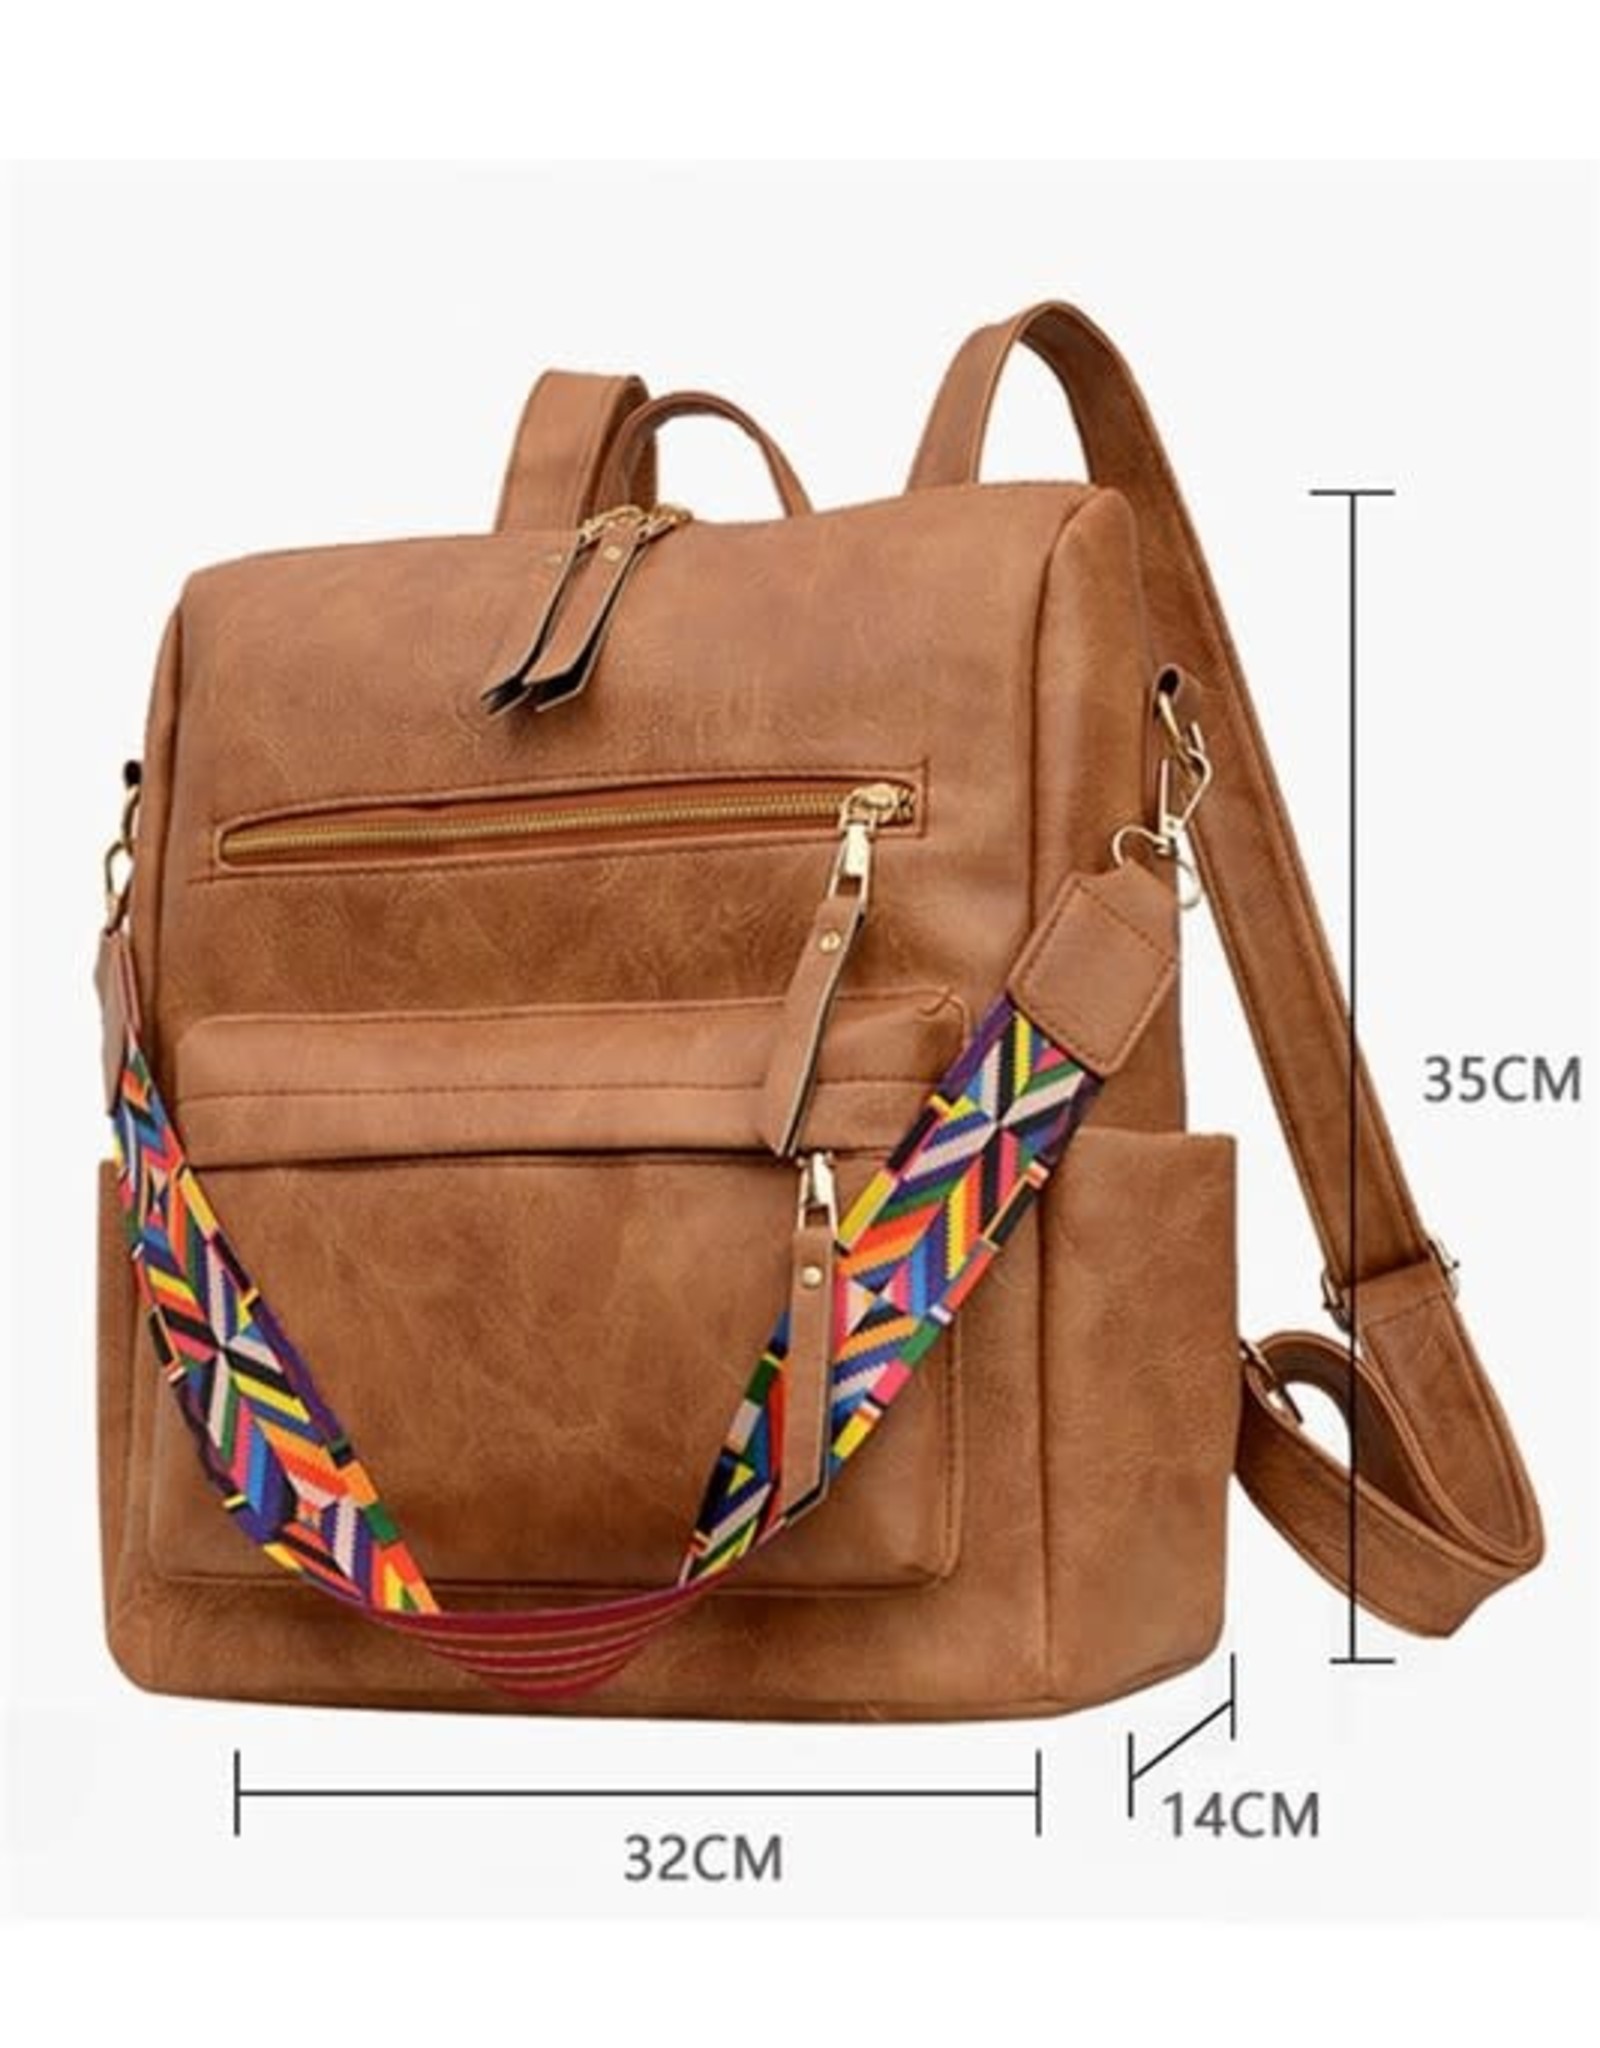 Black Casual Versatile Backpack Bag